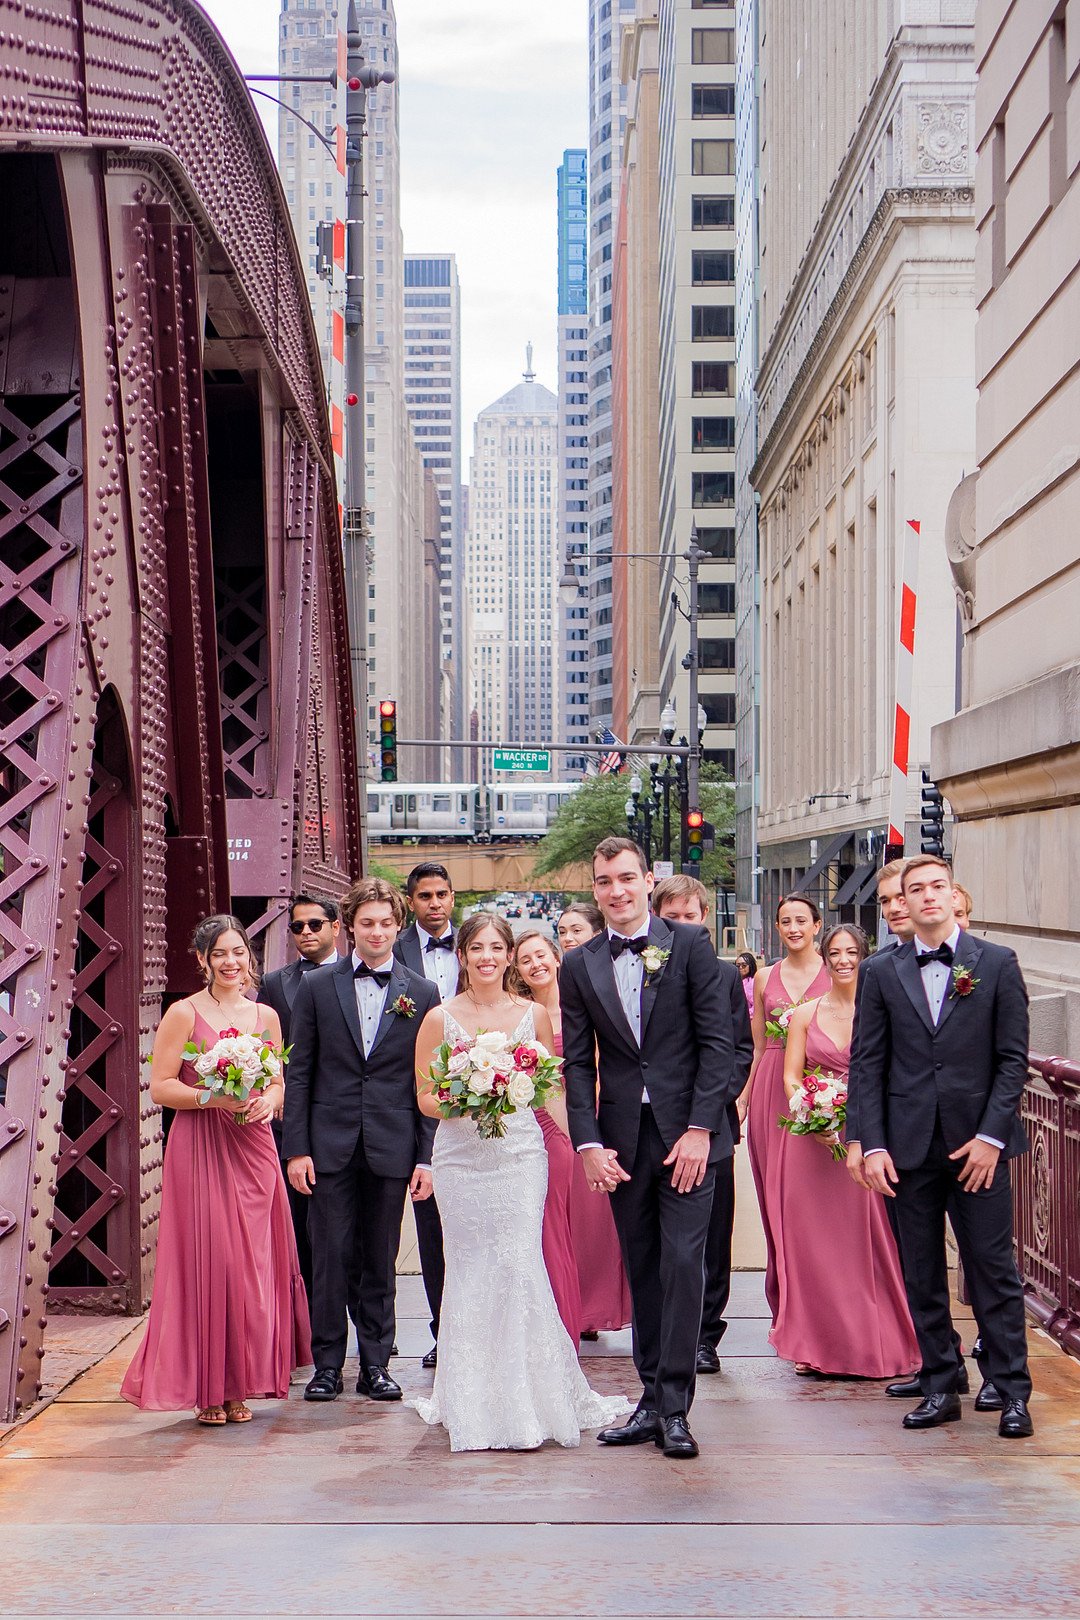 Kalomiris_Antonelli_Maura Black Photography_city-hall-chicago-wedding (39)_low.jpg